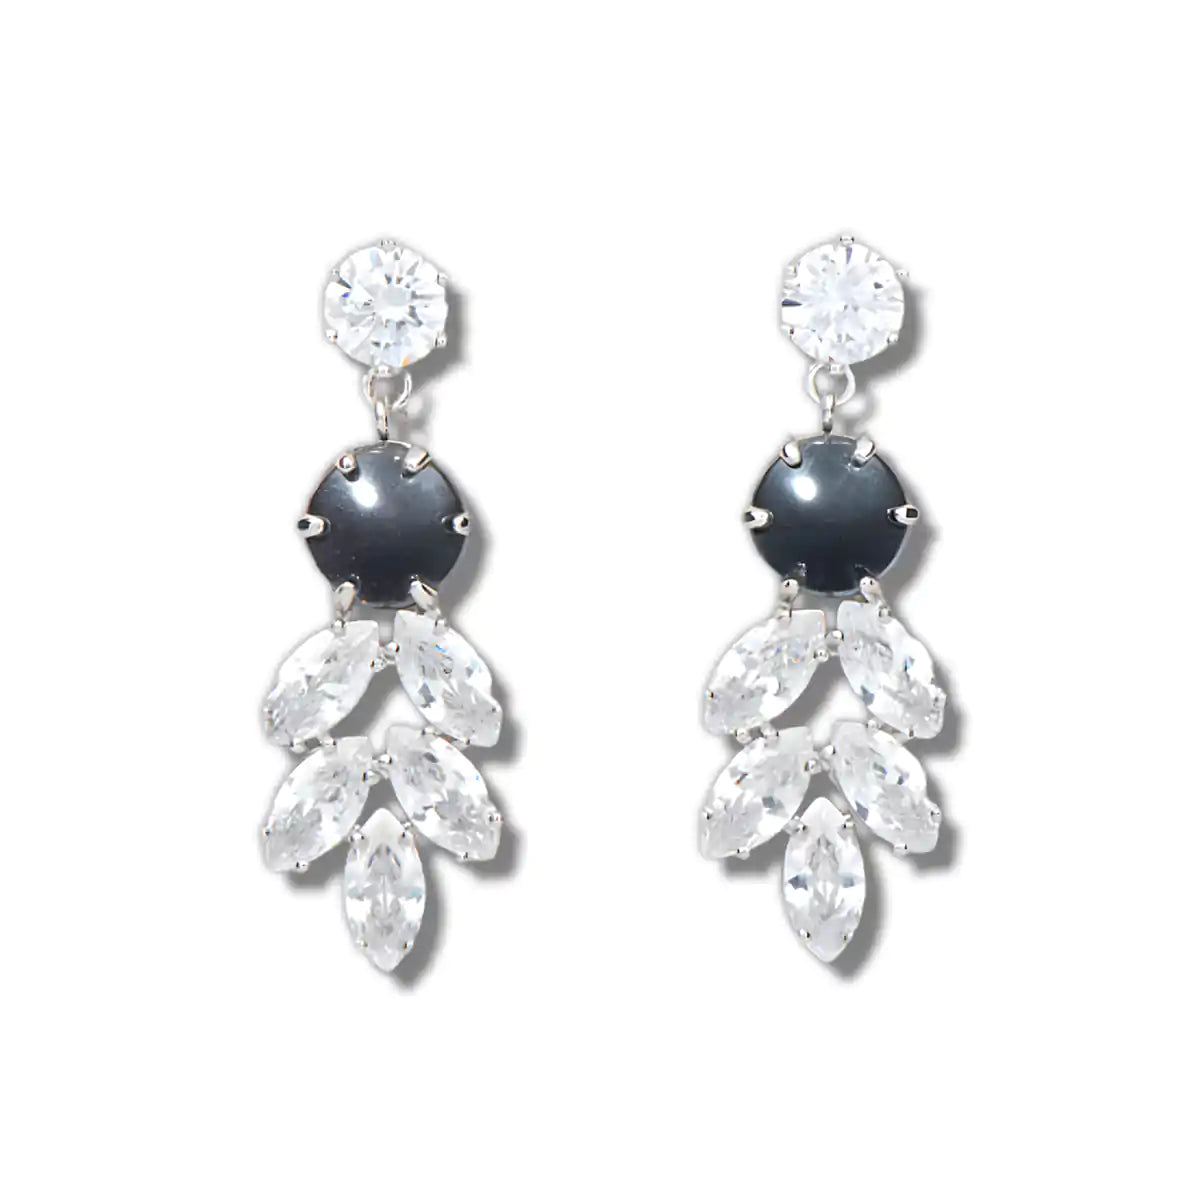 Hematite crystal garden earrings